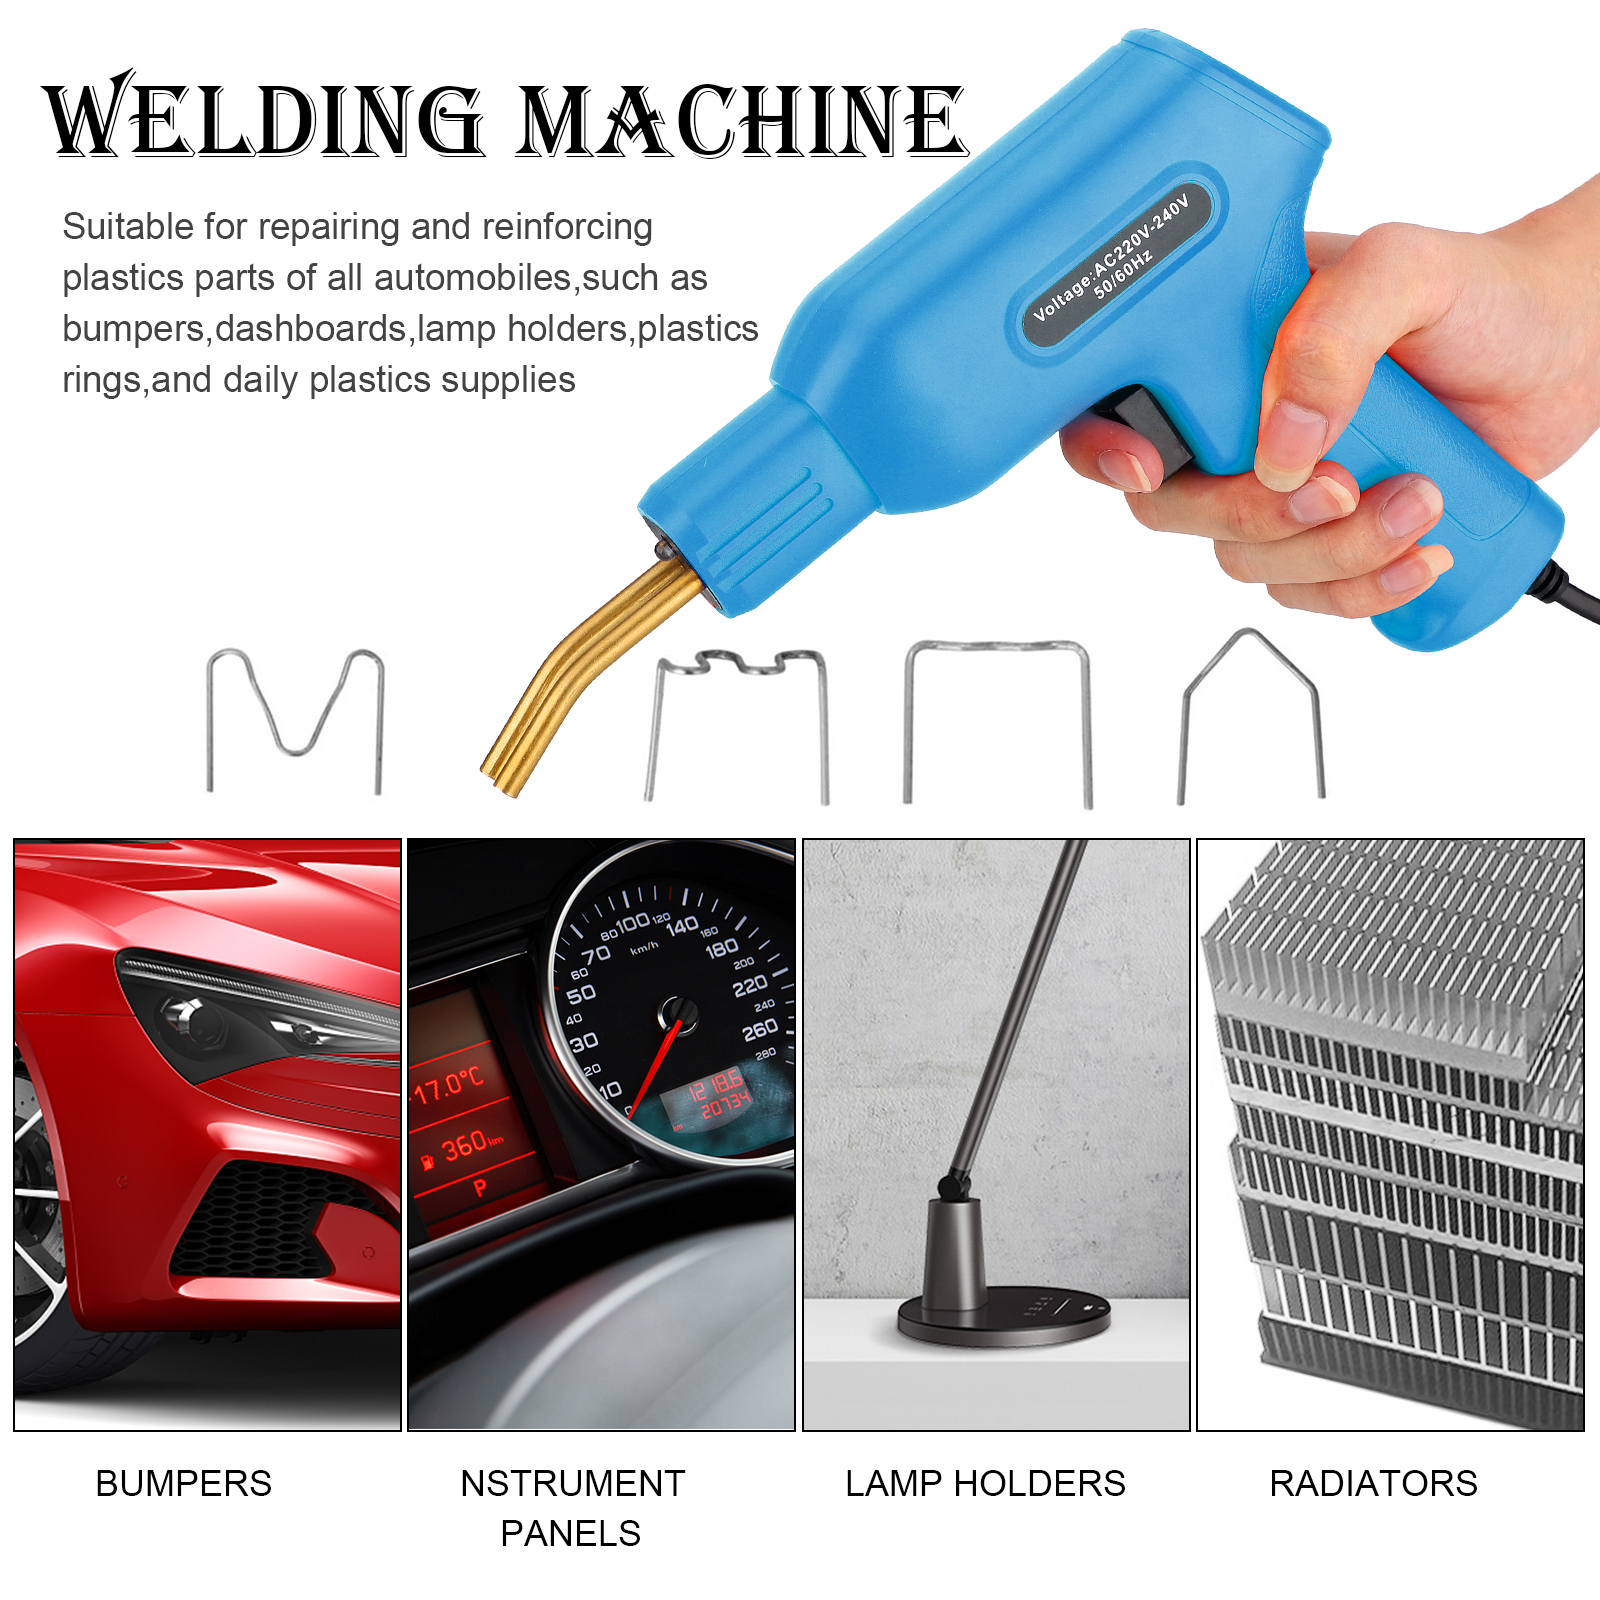 50W-Handy-Electric-Welding-Machine-Plastics-Welders-Garage-Tools-Hot-Staplers-Staple-PVC-Repair-Mach-1871582-2